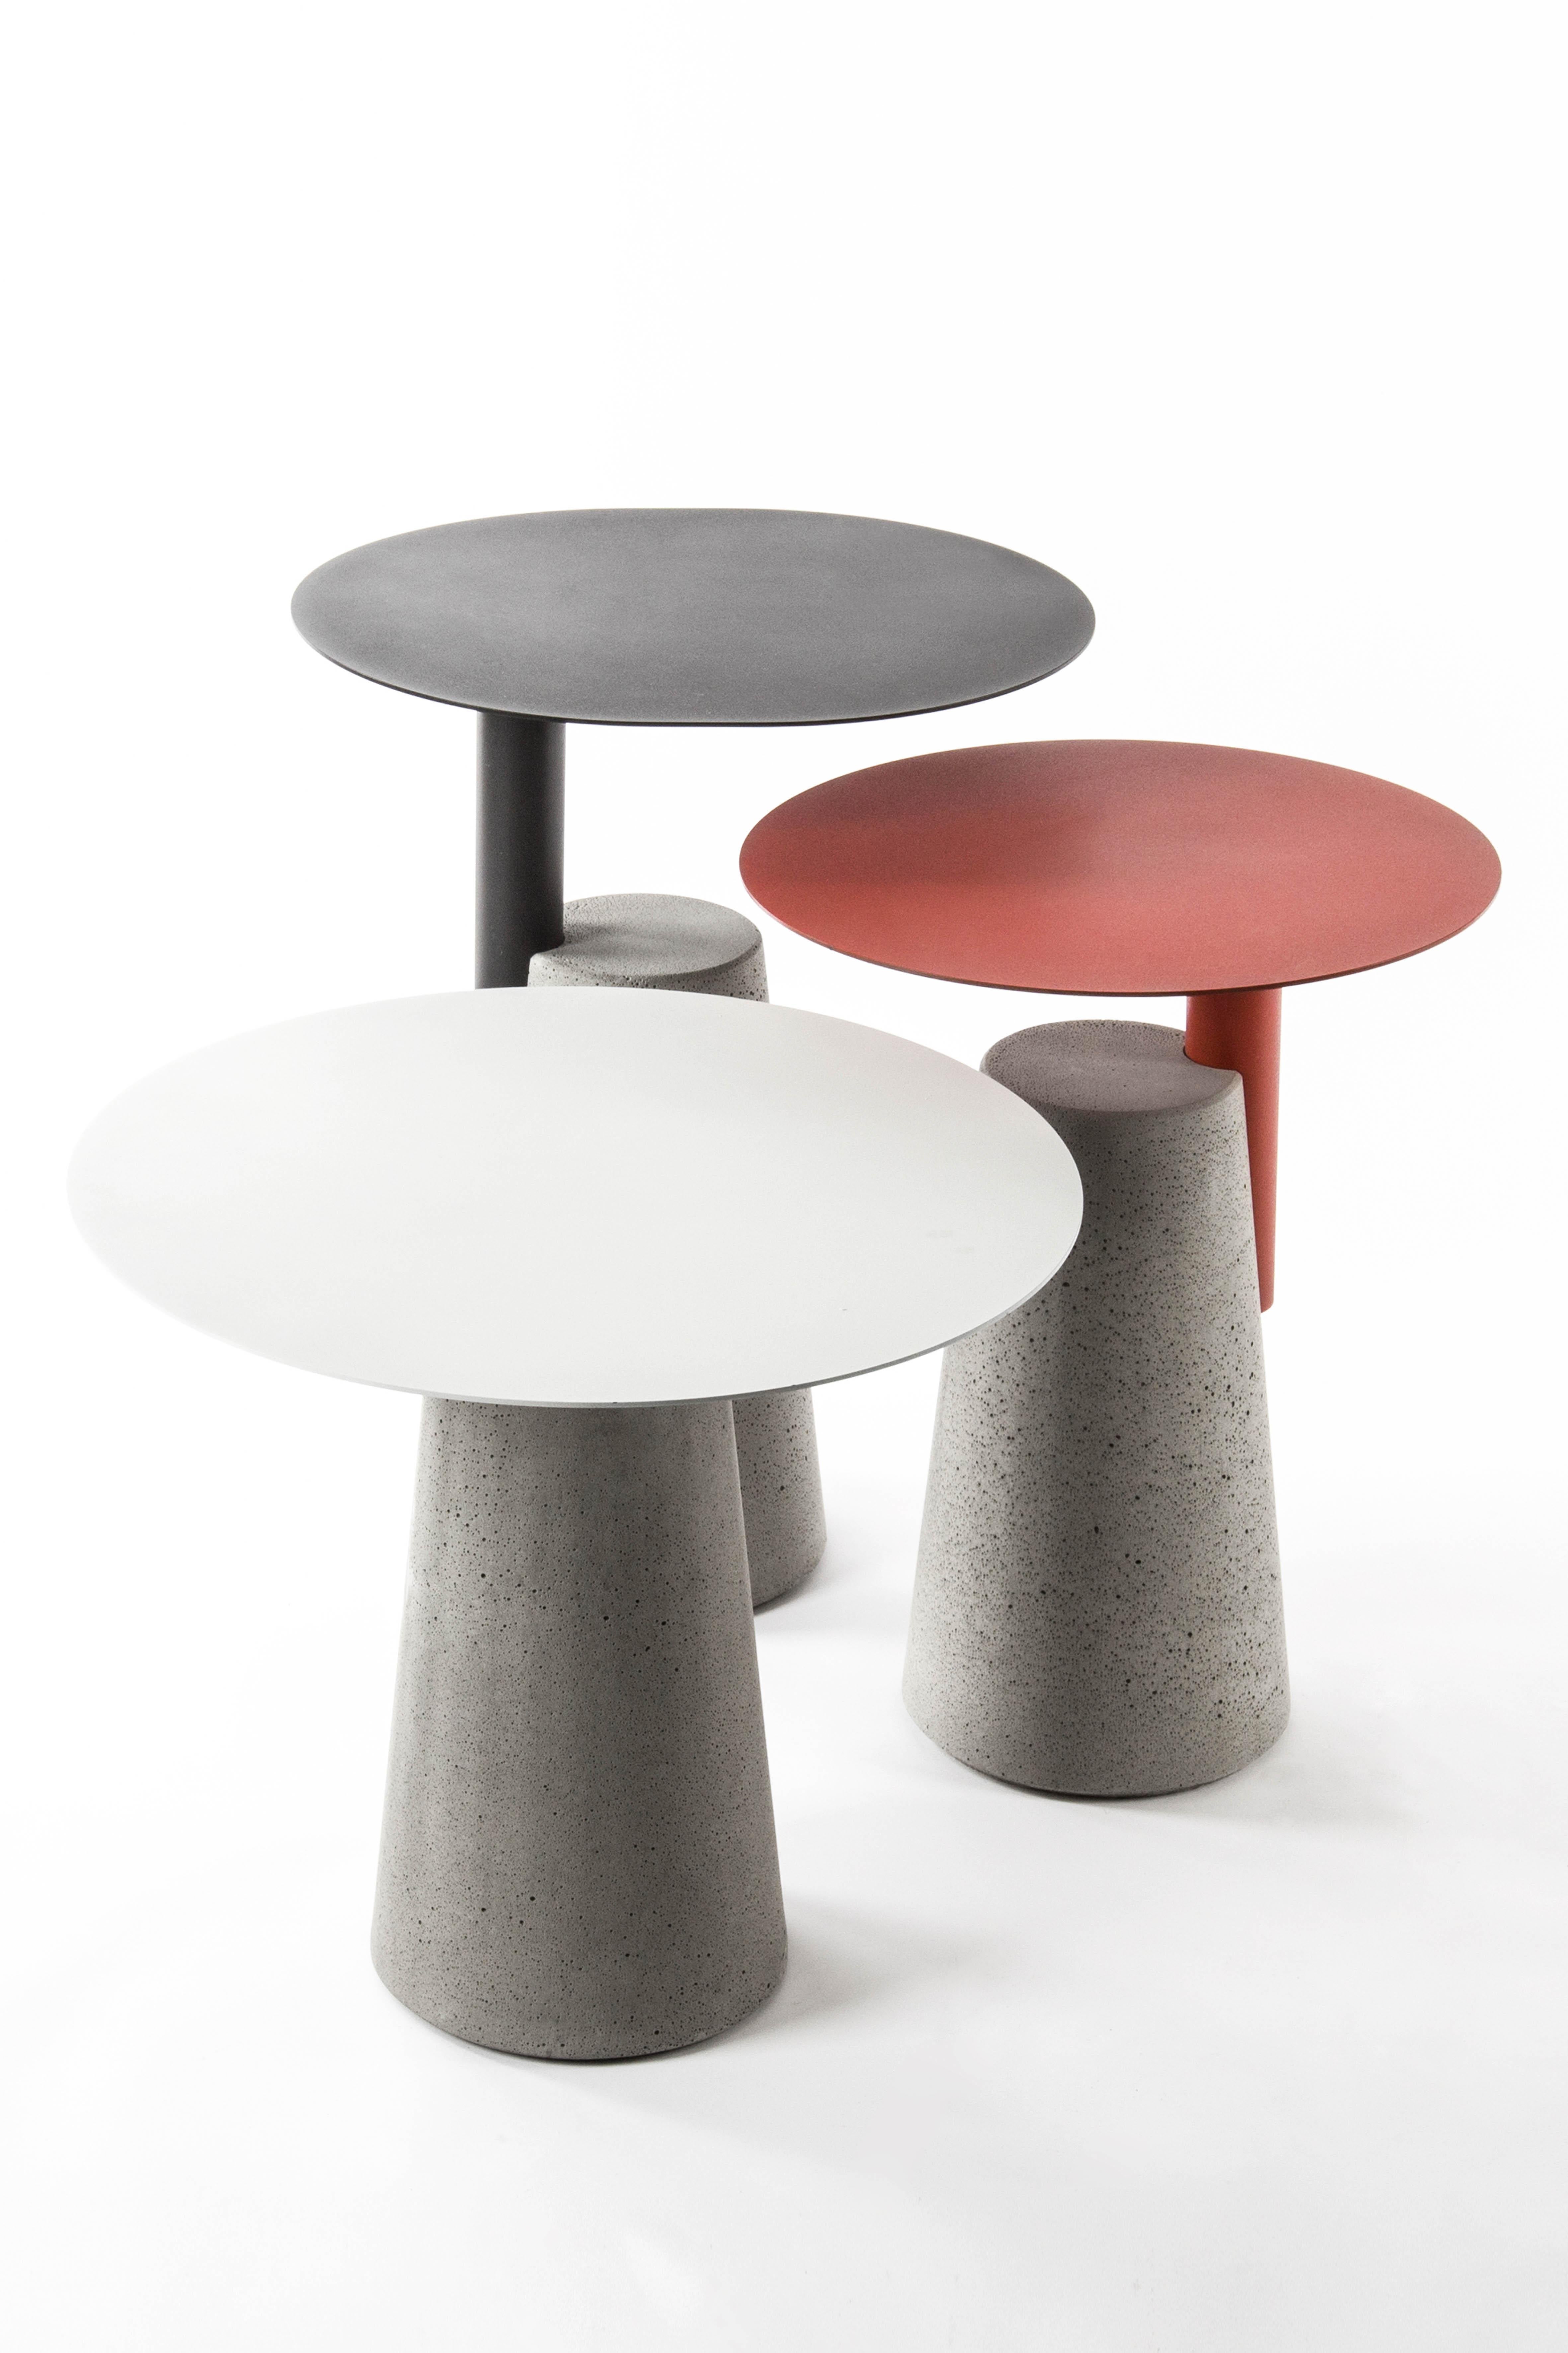 'BAI' is a collection of side table
by Bentu Design

Table top: steel
Table base: concrete

3 sizes available: 
- Small: H 45 cm - D 50 cm
- Medium: H 52 cm - D 40 cm
- Large: H 60 cm - D 45 cm

3 colors available: